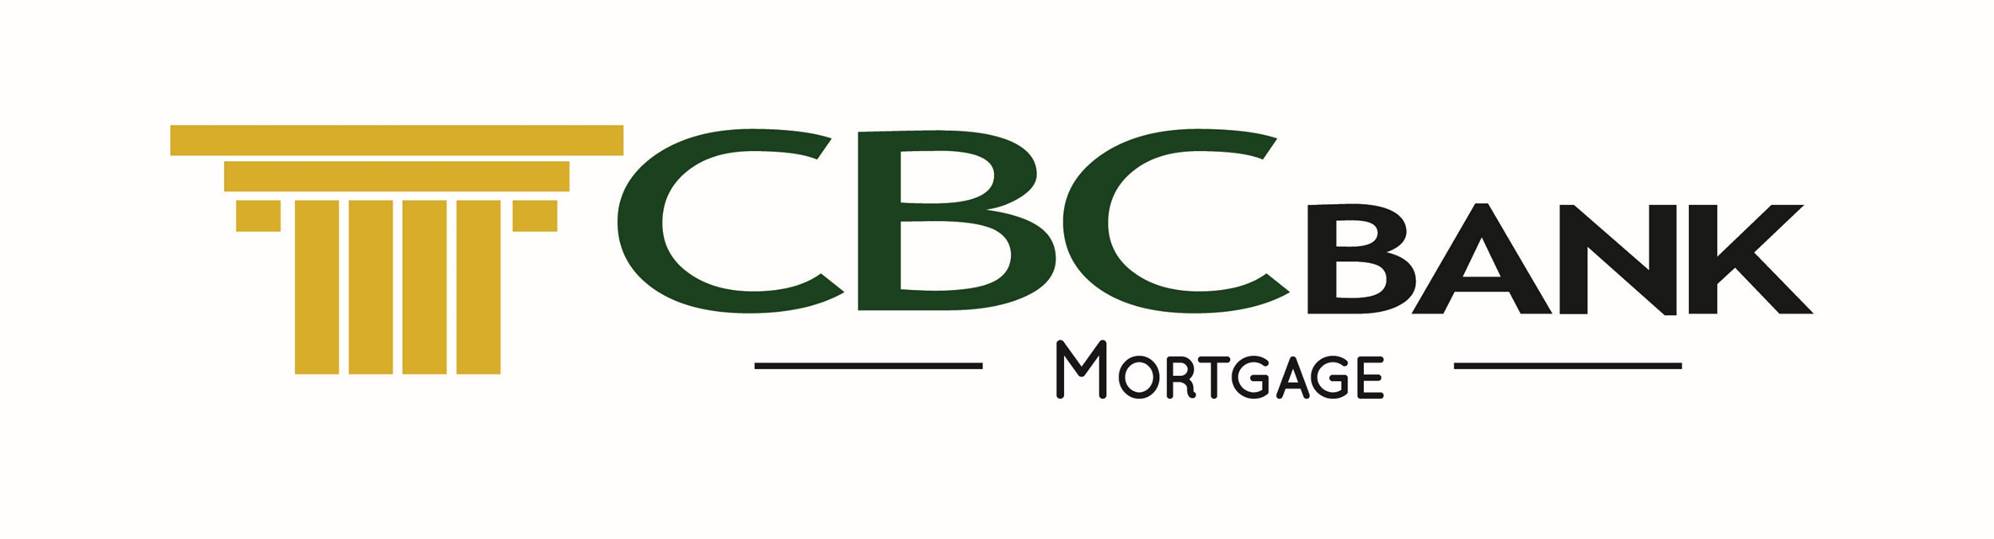 0CBC Bank.jpg